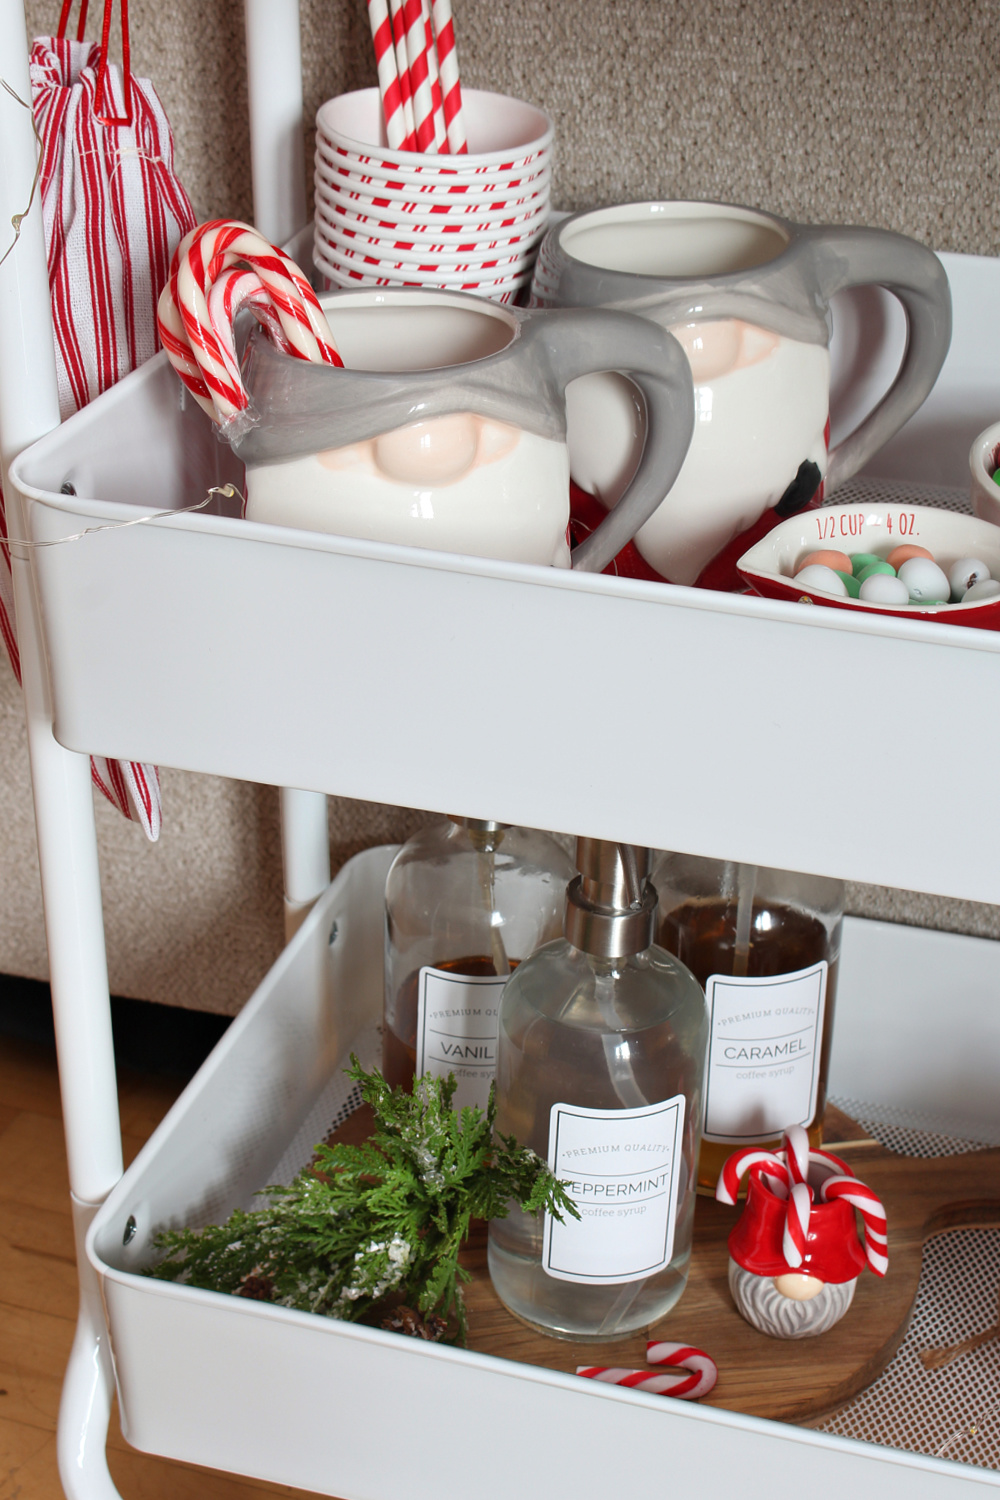 Cute hot chocolate bar cart with Christmas gnome mugs.